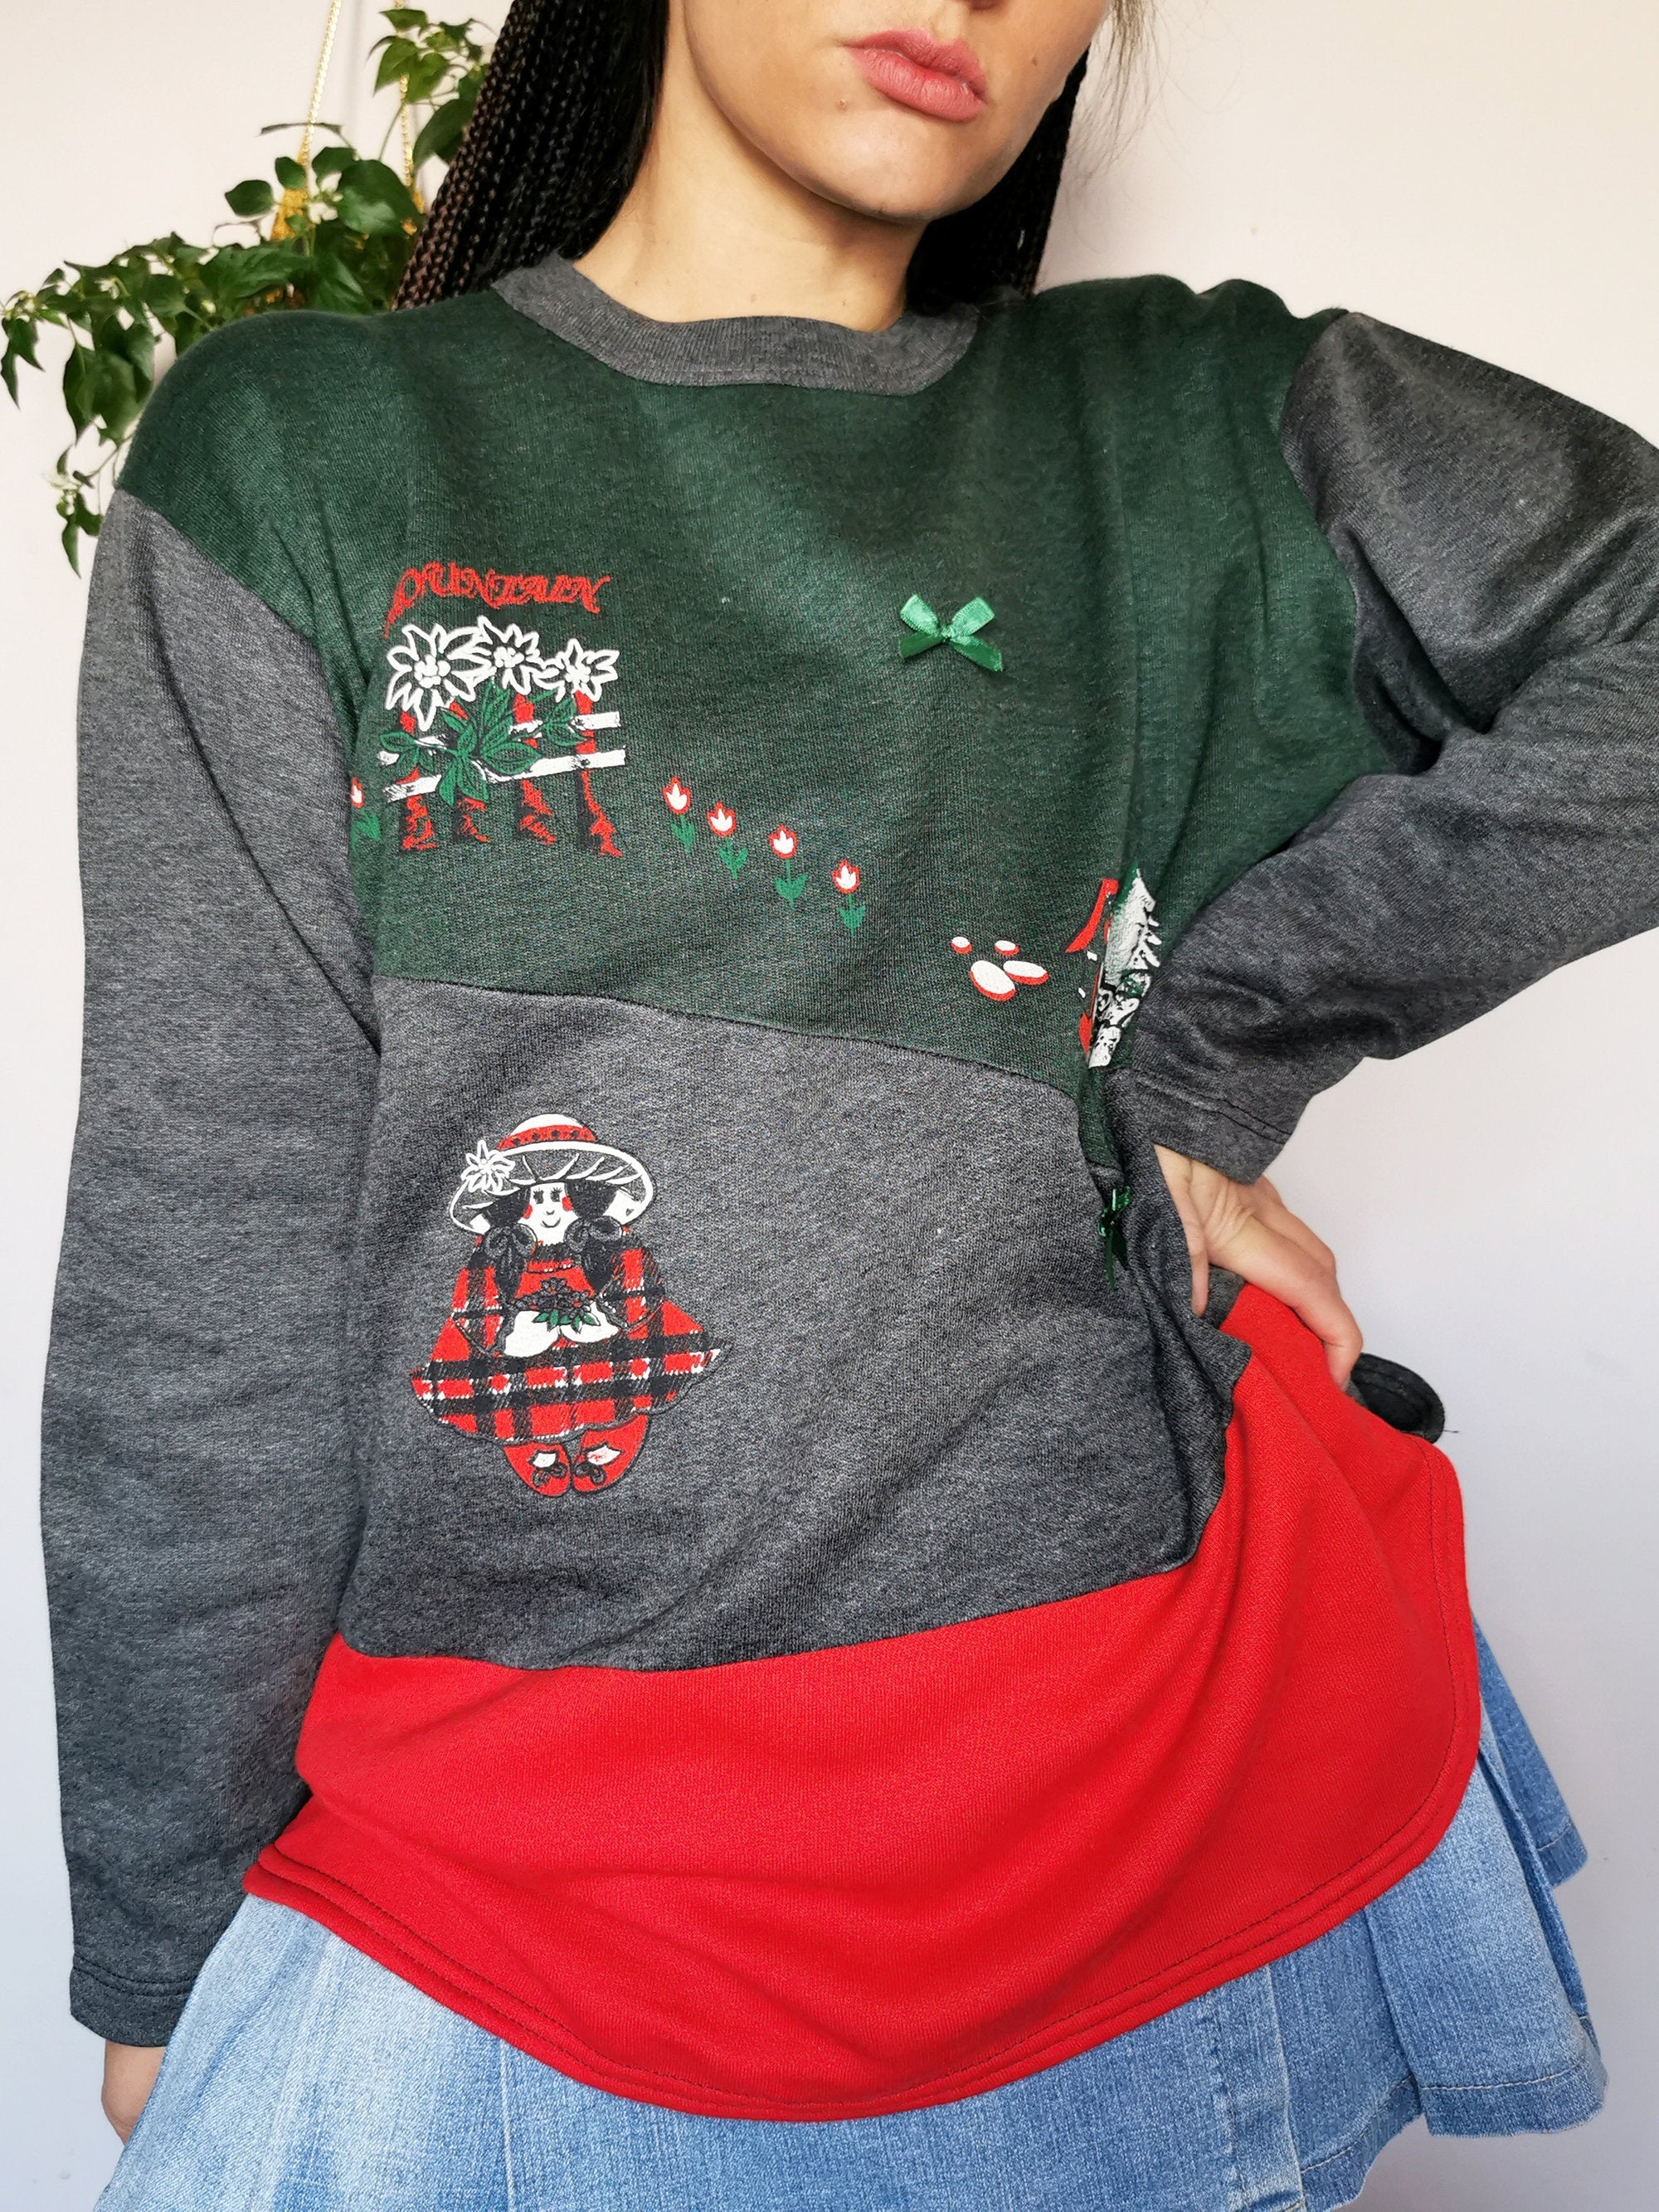 Vintage 90s Christmas color block sweatshirt top with print